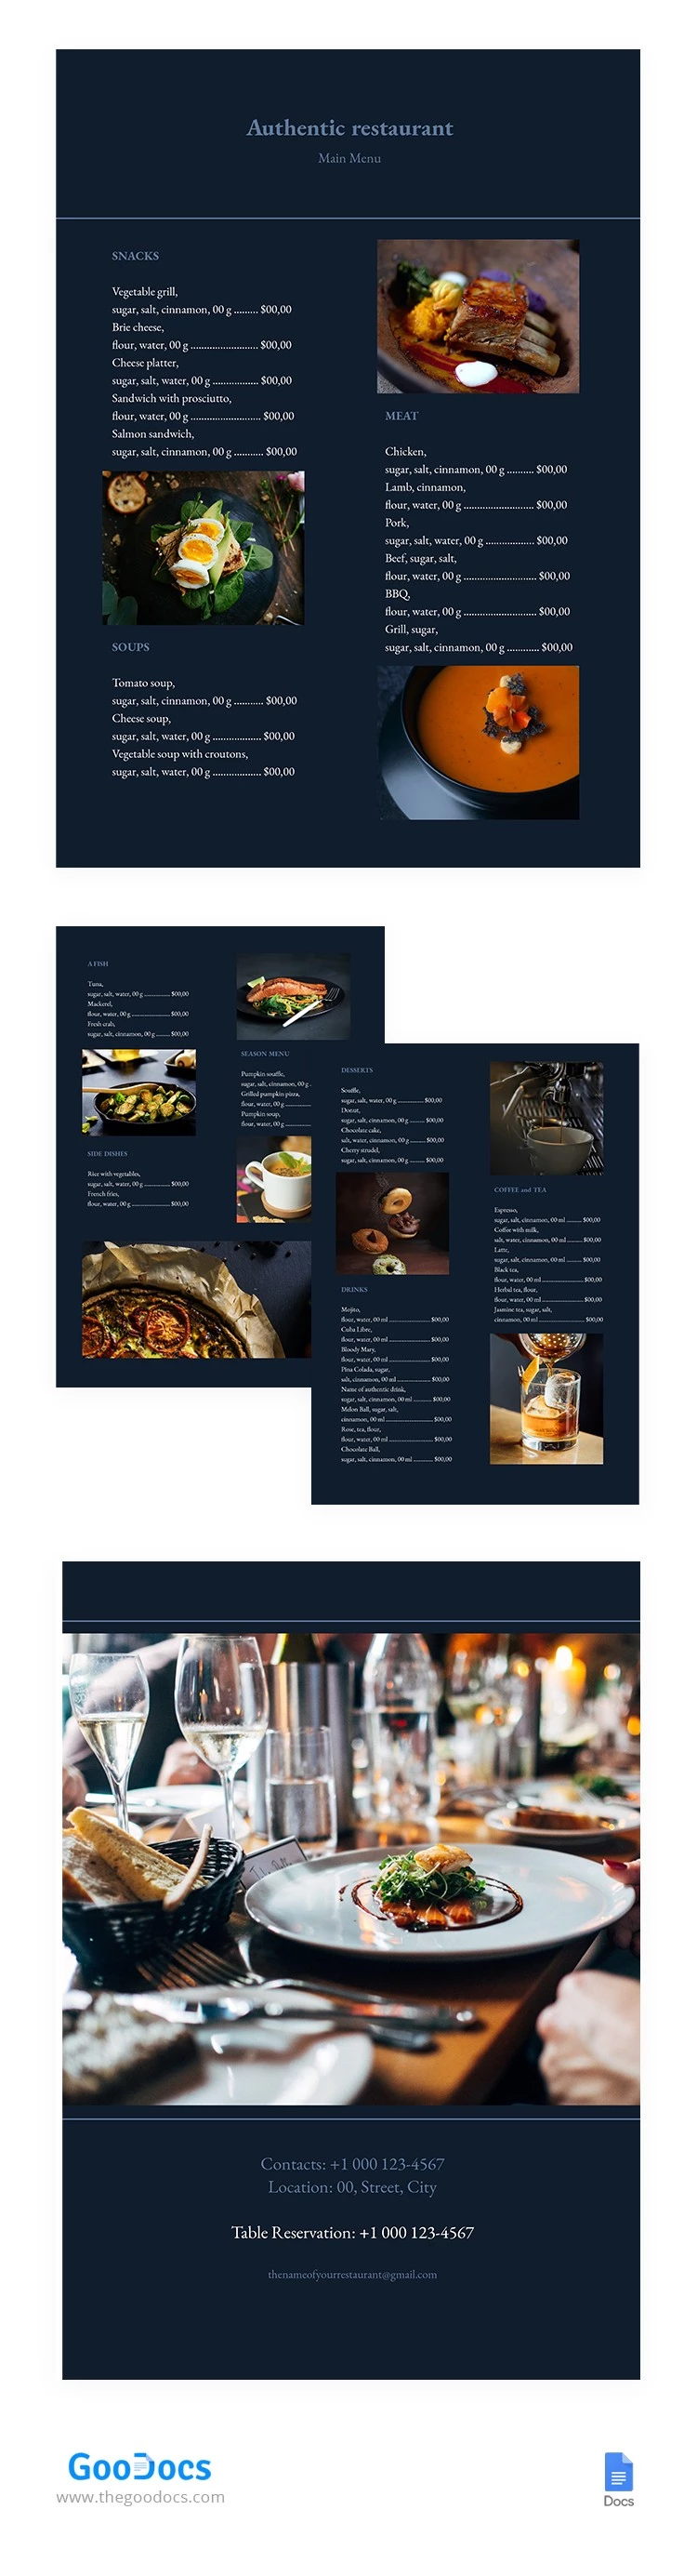 Authentic Restaurant Menu - free Google Docs Template - 10062286